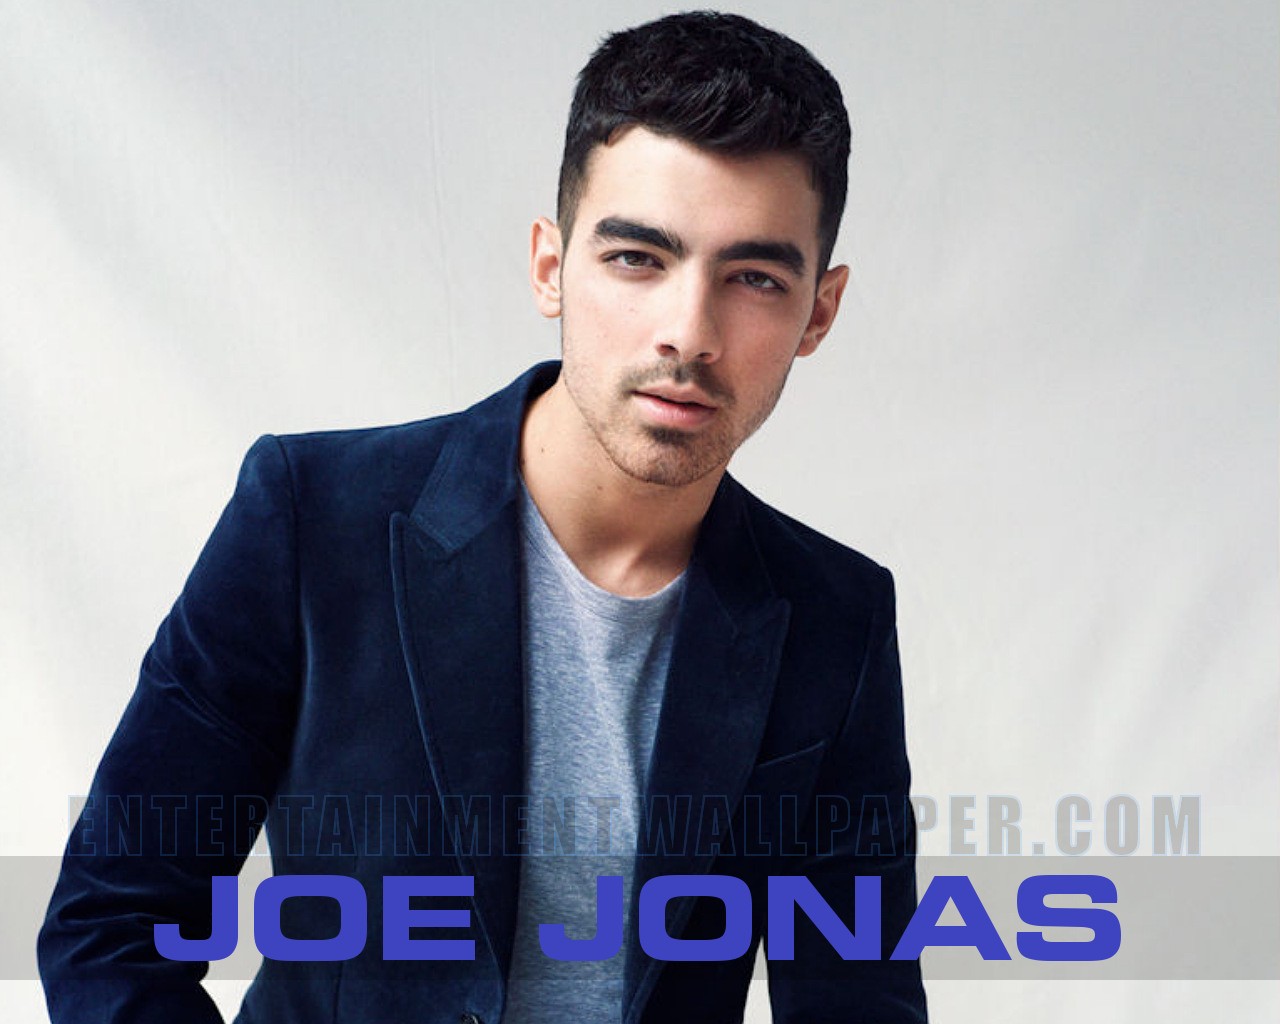 Joe Jonas Image Wallpaper Photos